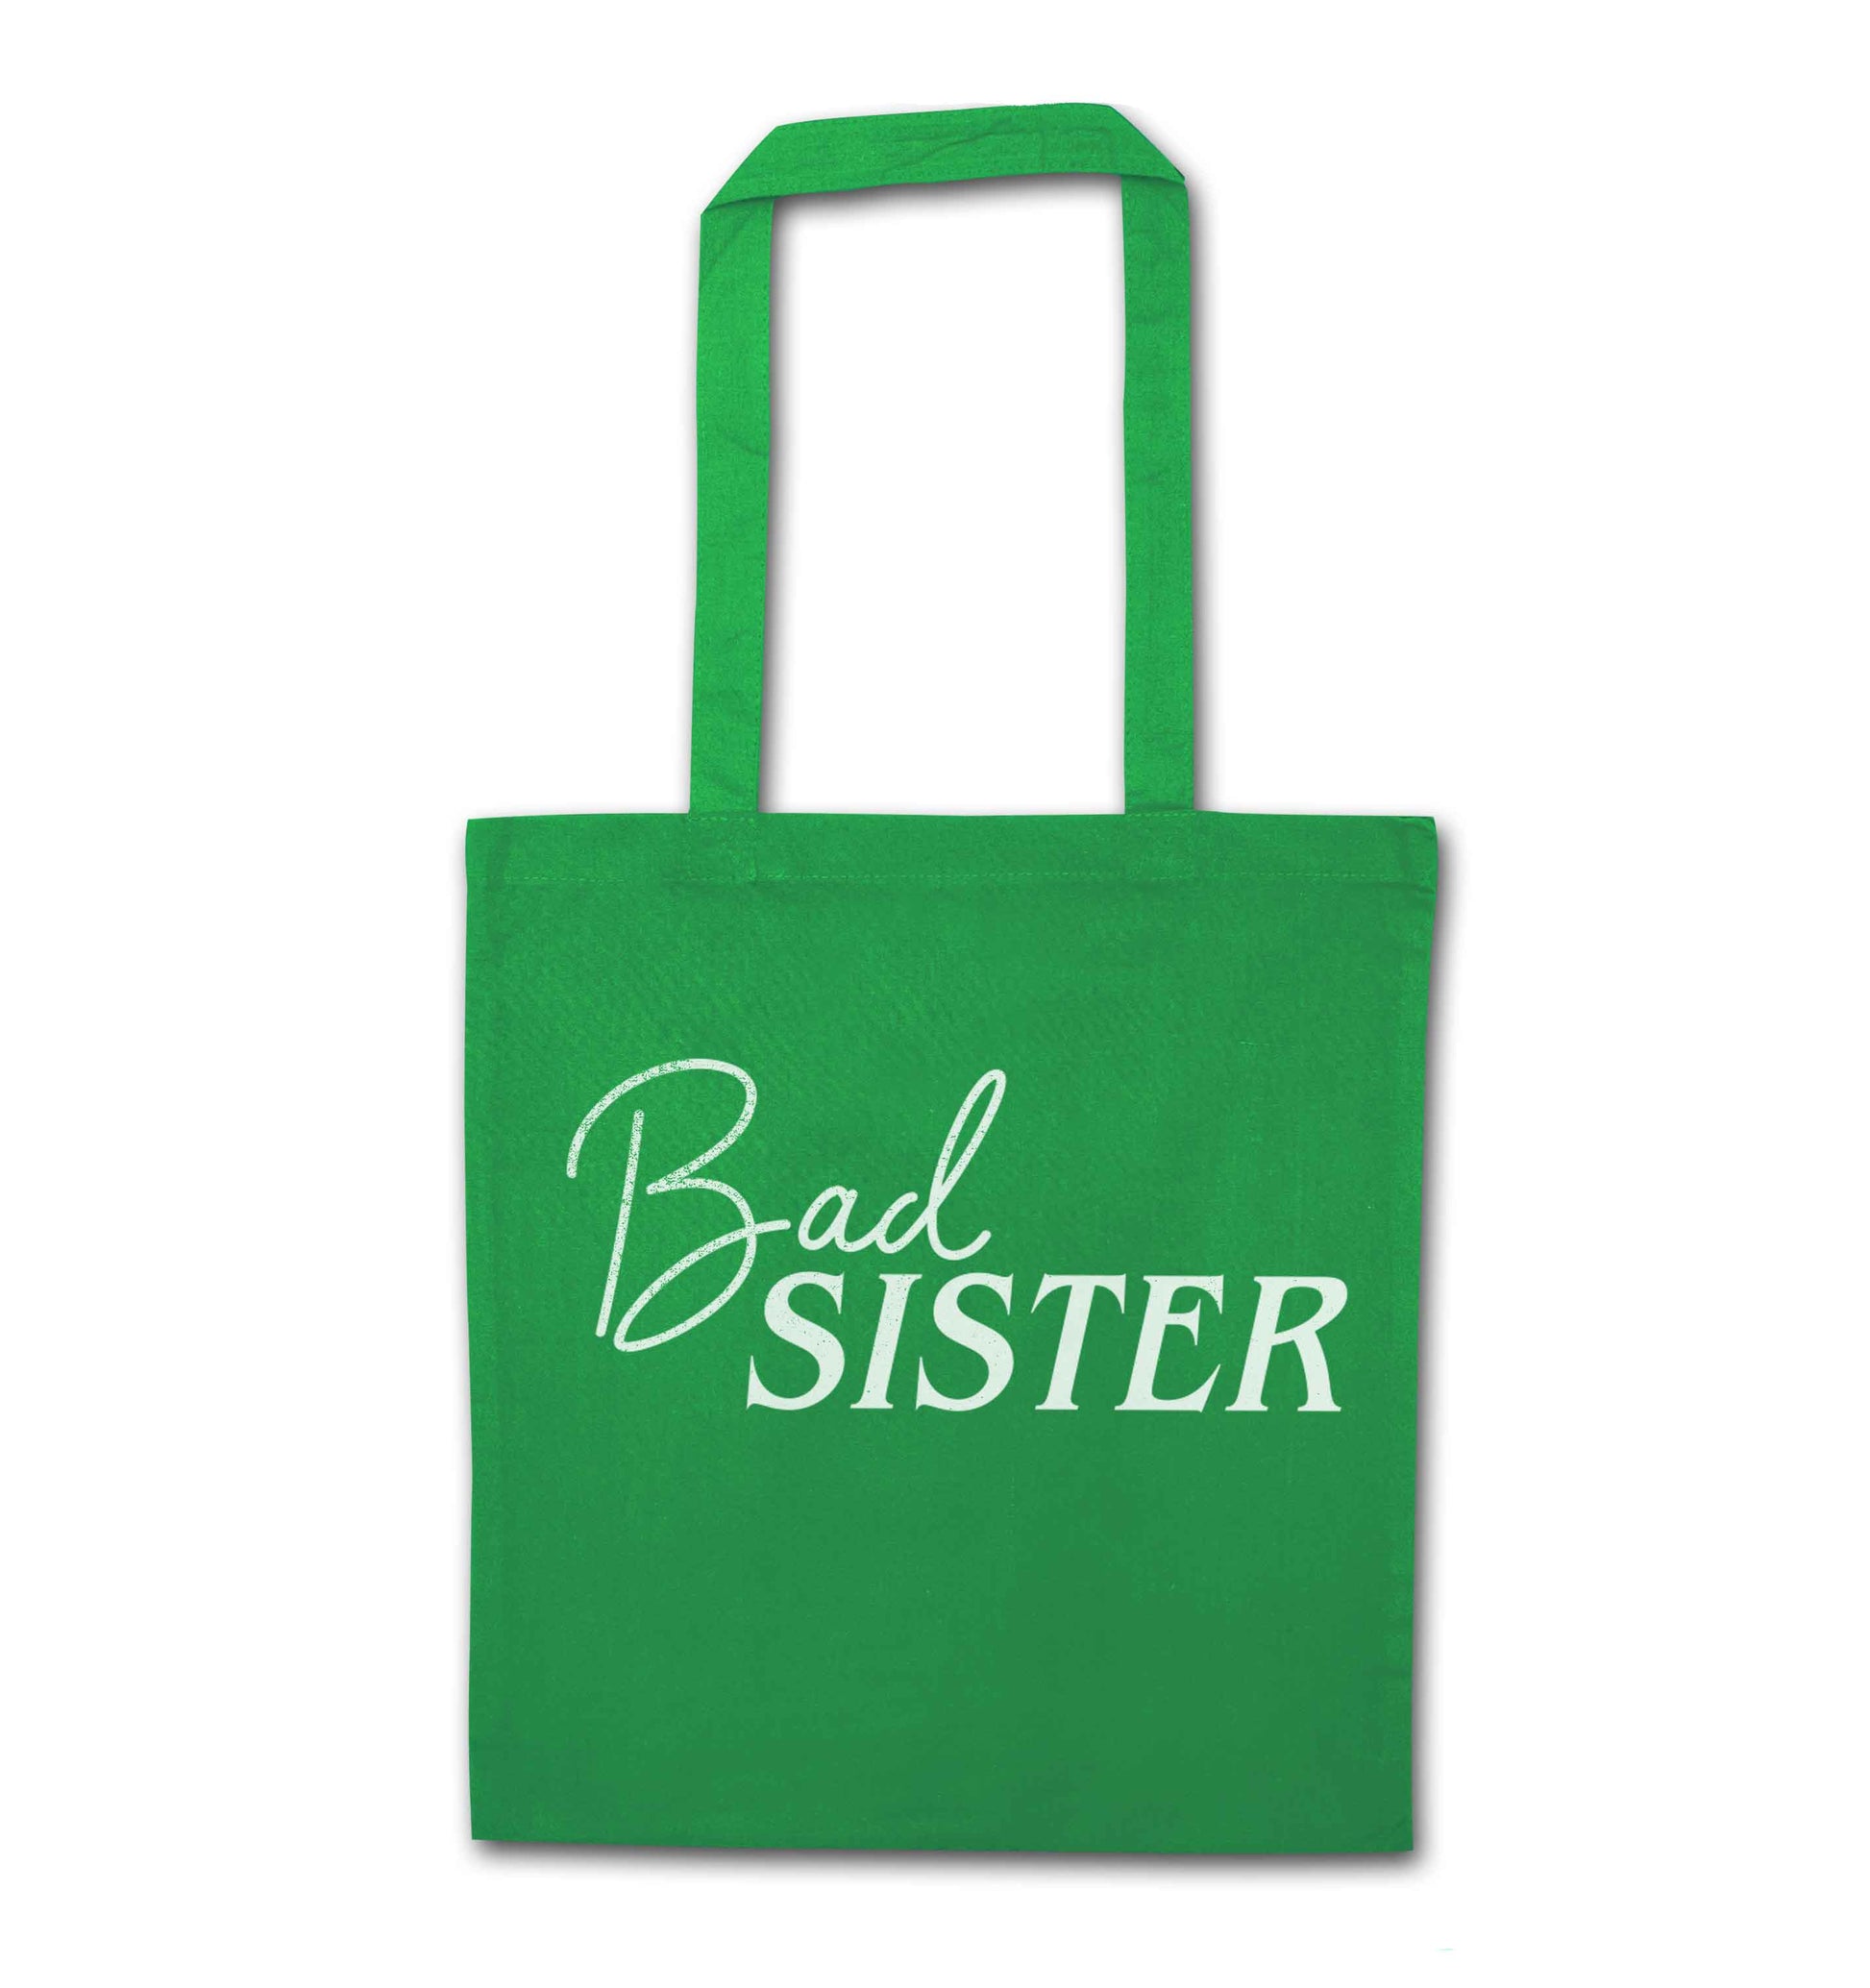 Bad sister green tote bag